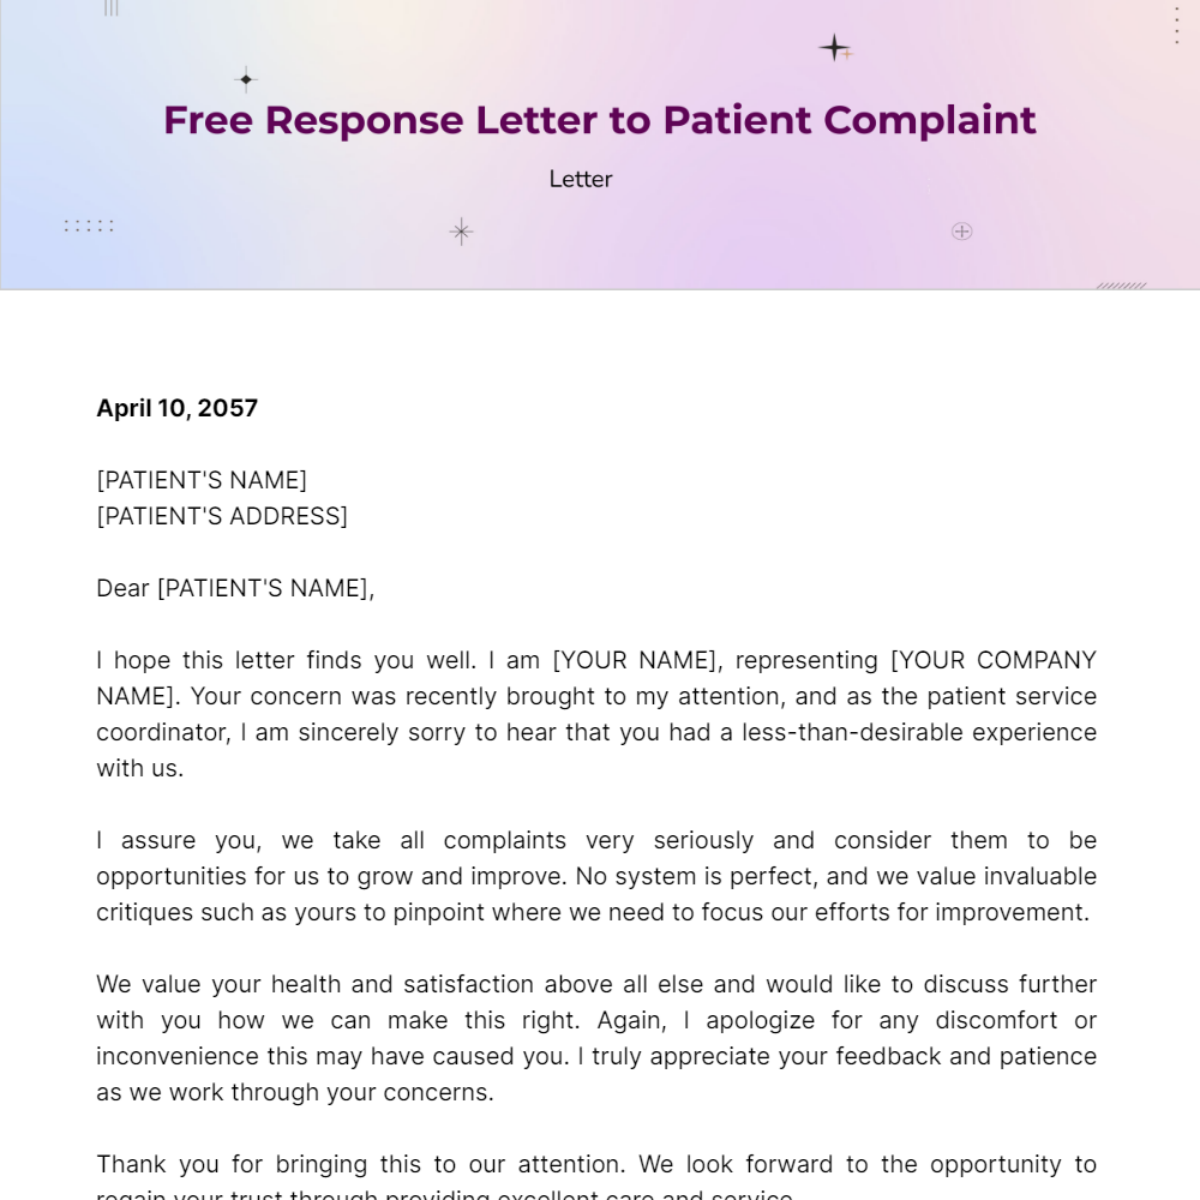 Free Response Letter to Patient Complaint